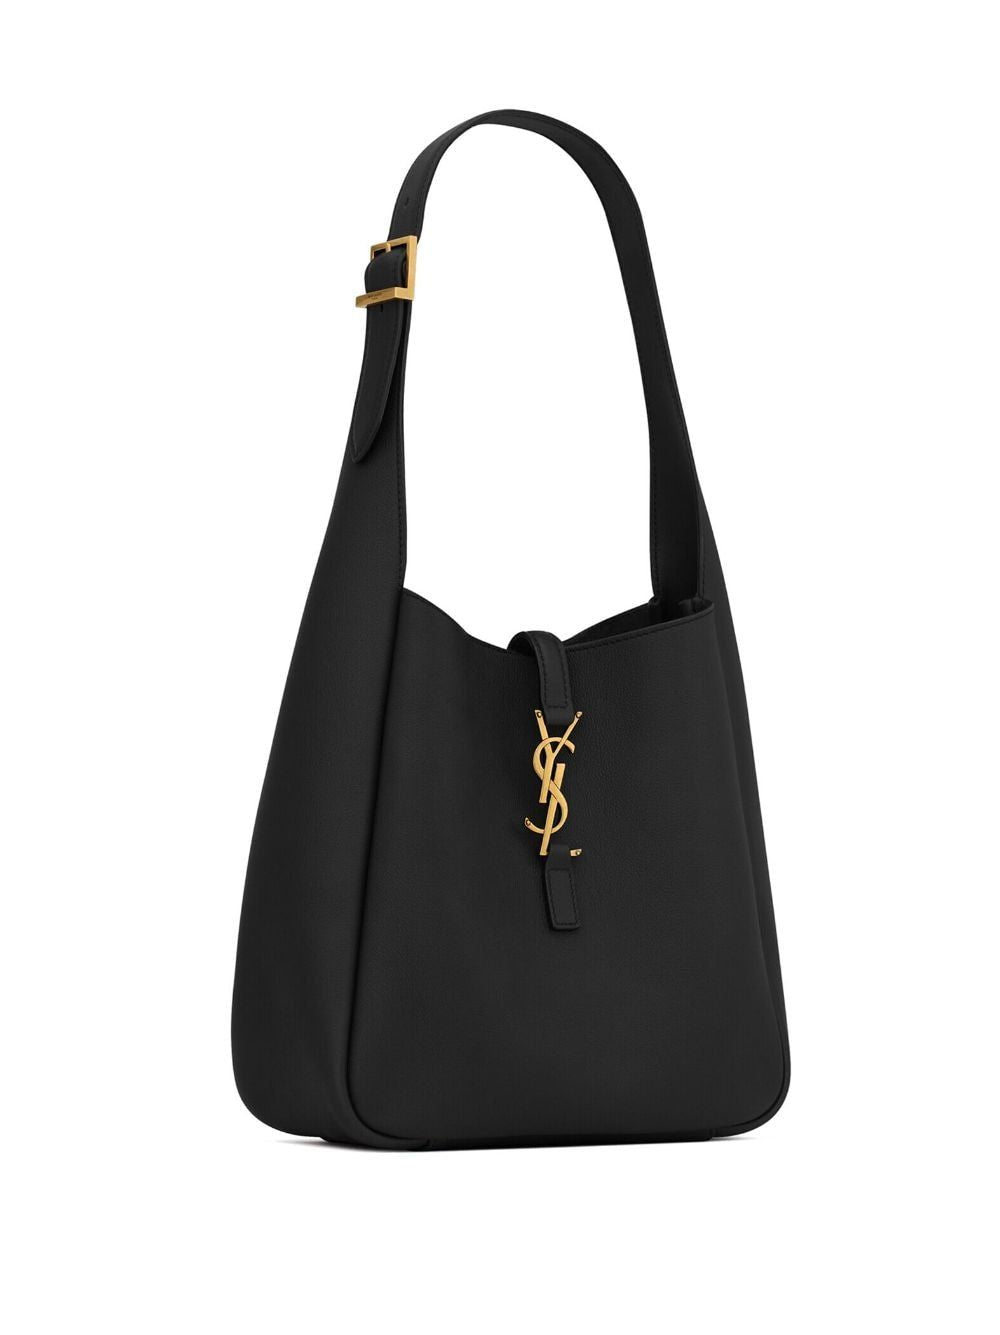 SAINT LAURENT Mini Black Grained Calfskin Handbag with Bronze-Tone Closure and Adjustable Top Handle - 23x22x8.5 cm